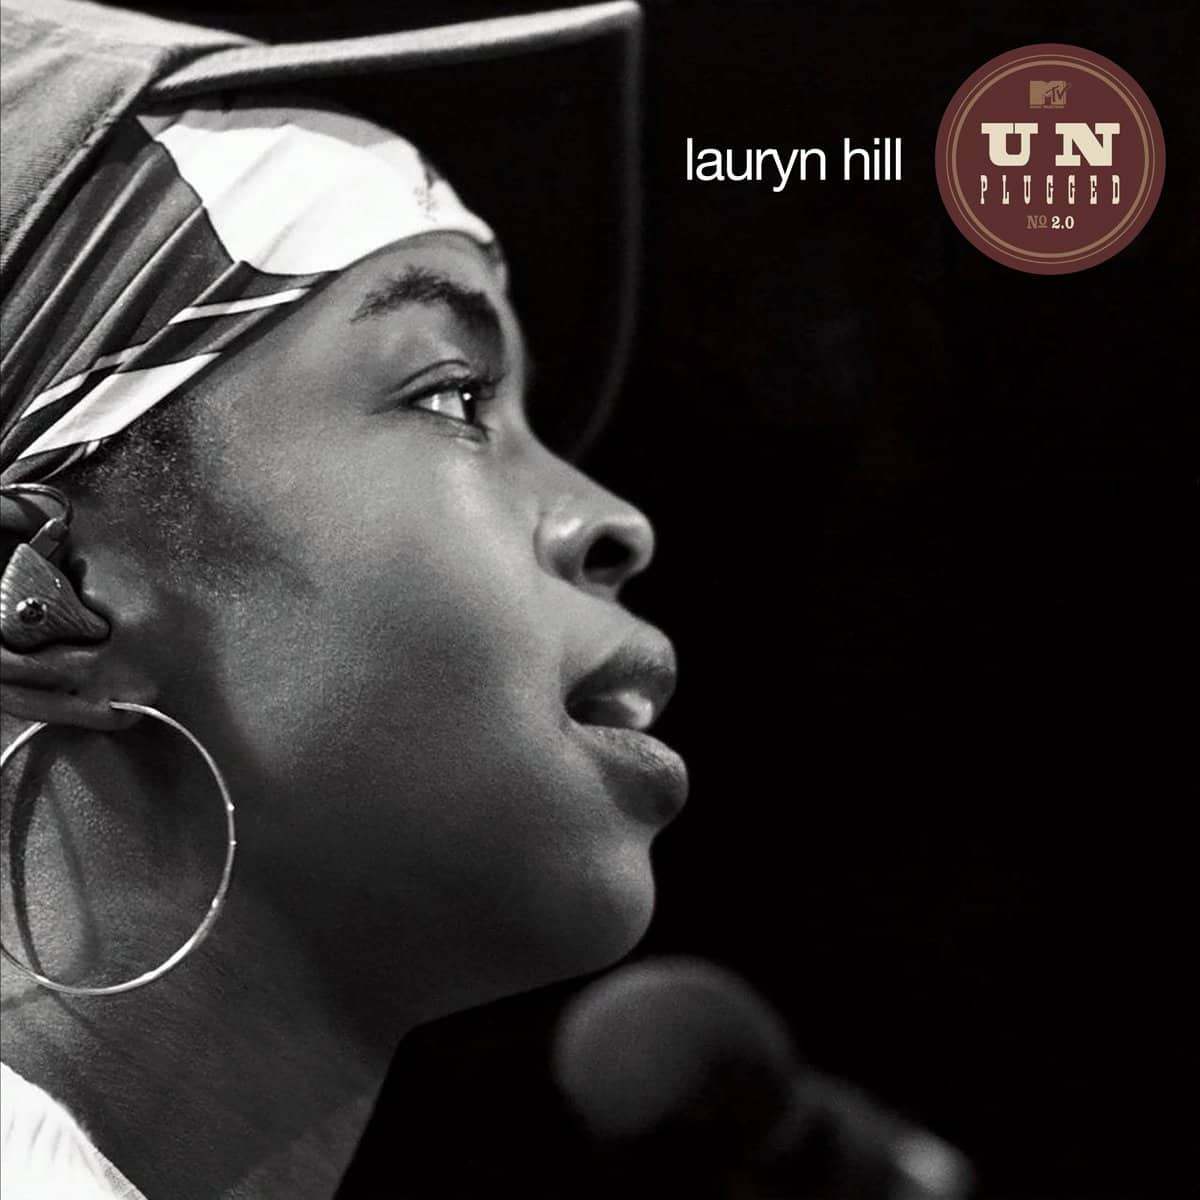 Lauryn-Hill-MTV-Unplugged-2.0-vinyl-record-album1